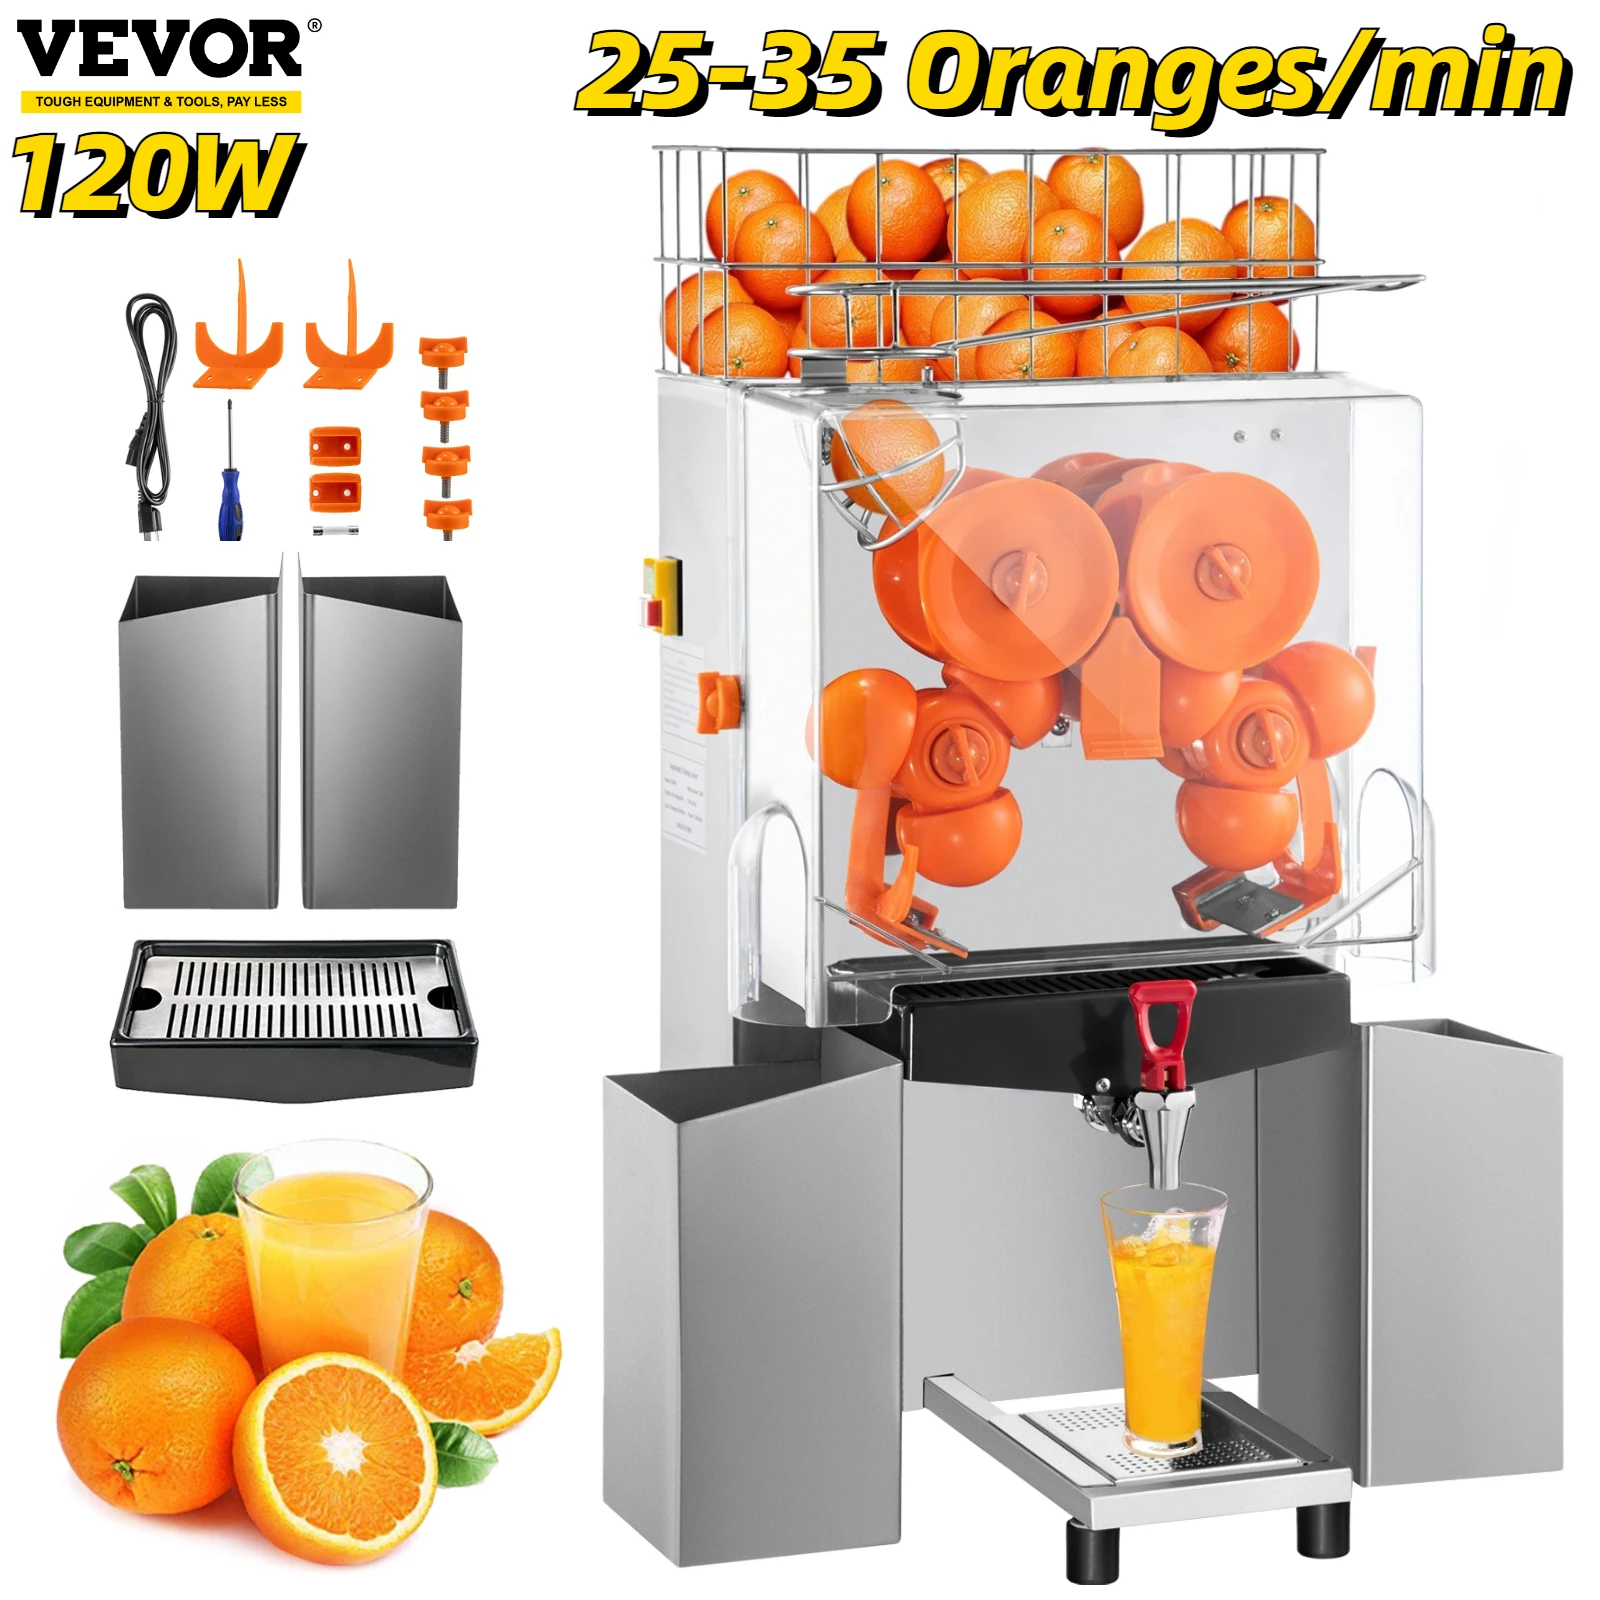 VEVOR Electric Orange Juice Machine Efficient Squeezing Portable Juicer Blender Fresh Food Mixer Squeezer for Home Commercial